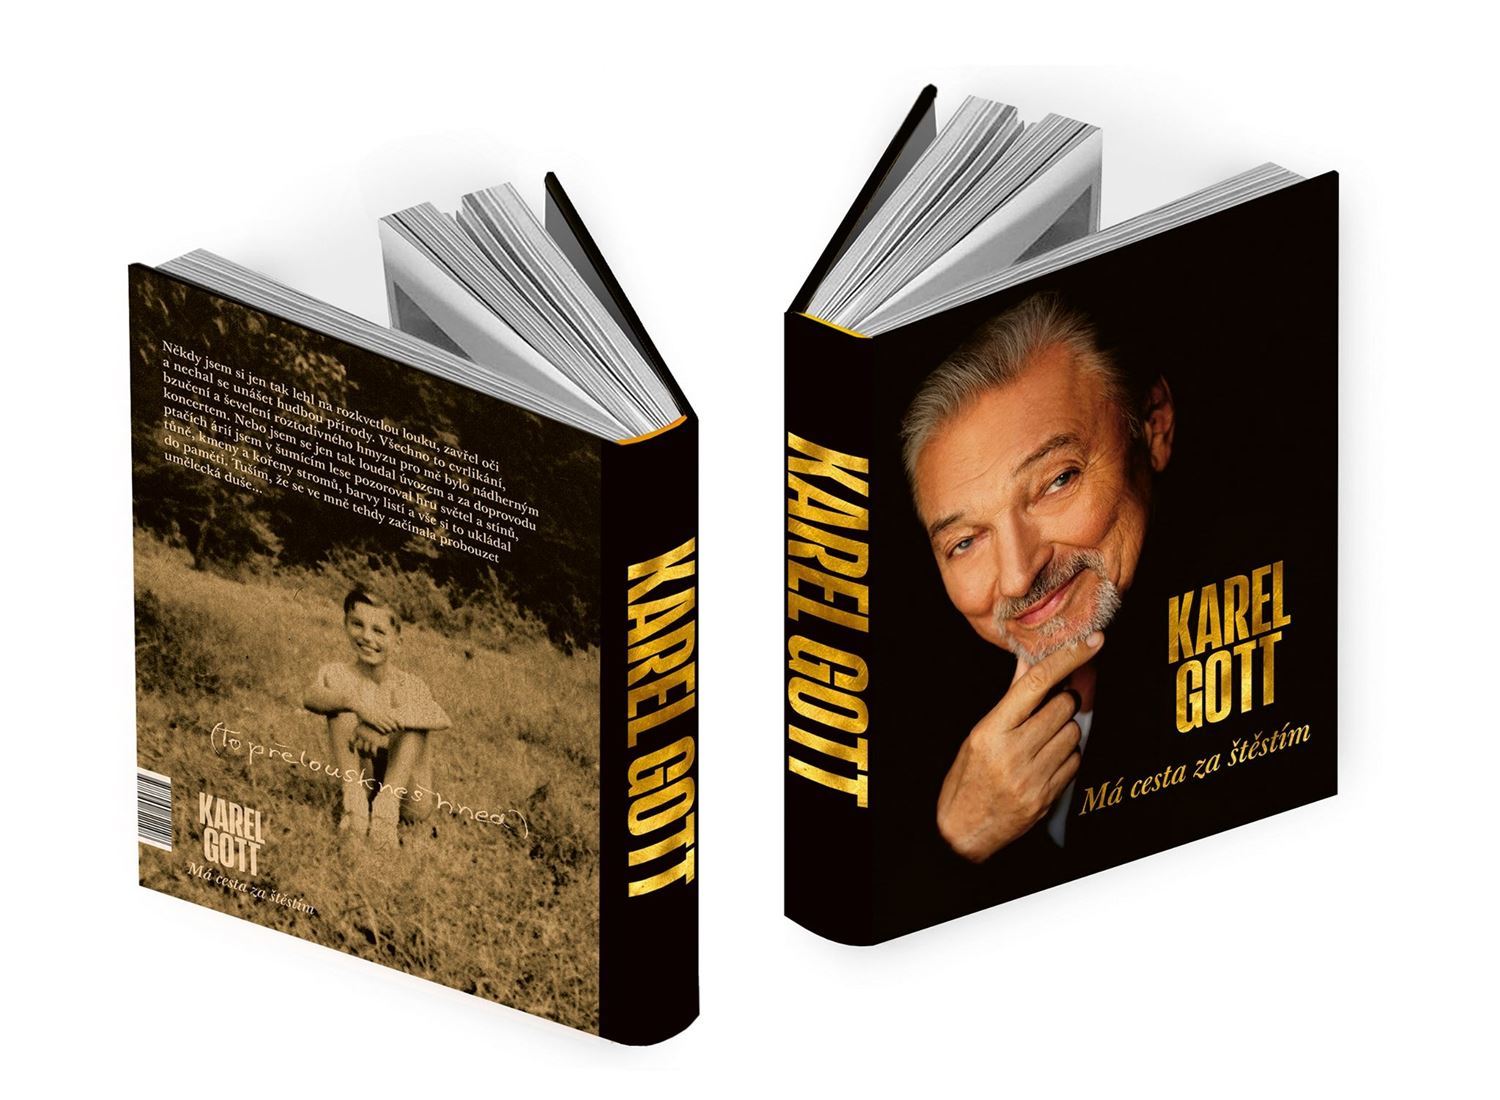 Karel Gott : Ma cesta za stestim - autobiography (czech)